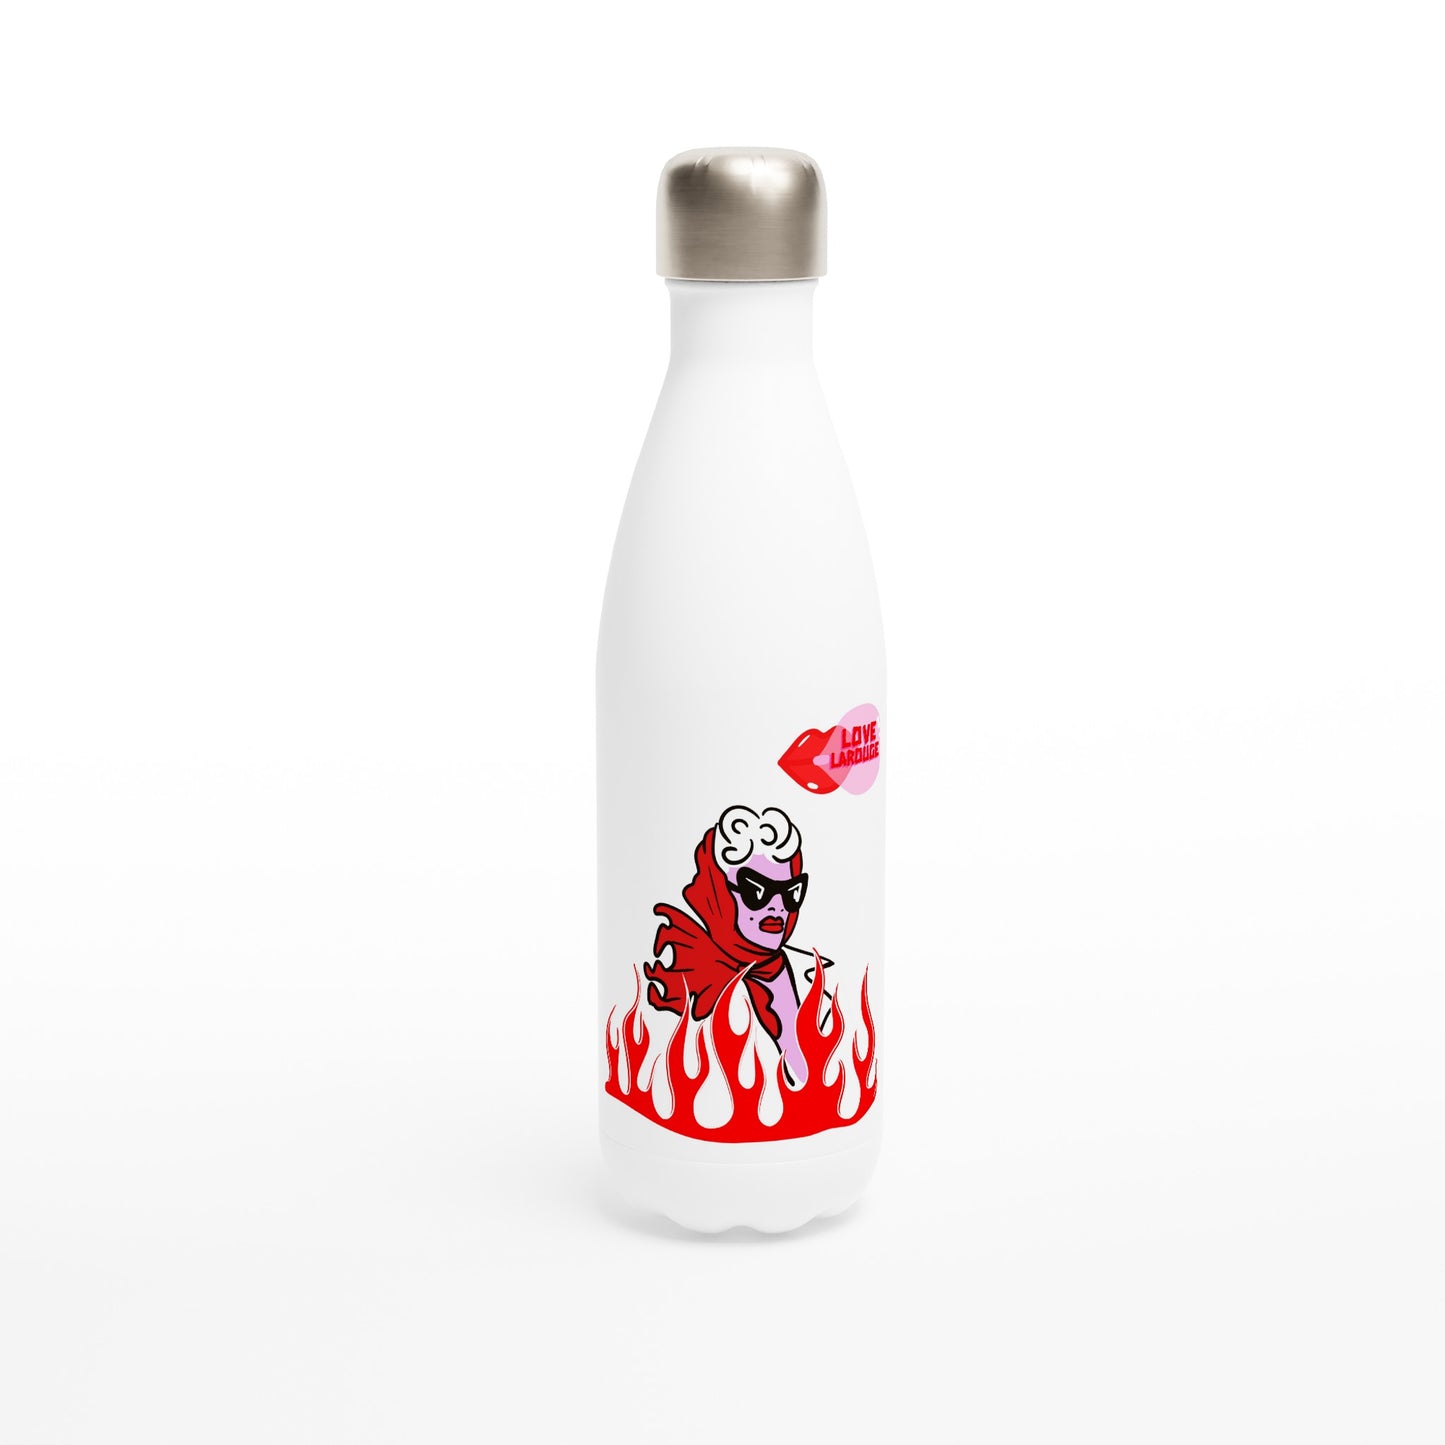 LOVE LAROUGE "LIT CHICK" White 17oz Stainless Steel Water Bottle